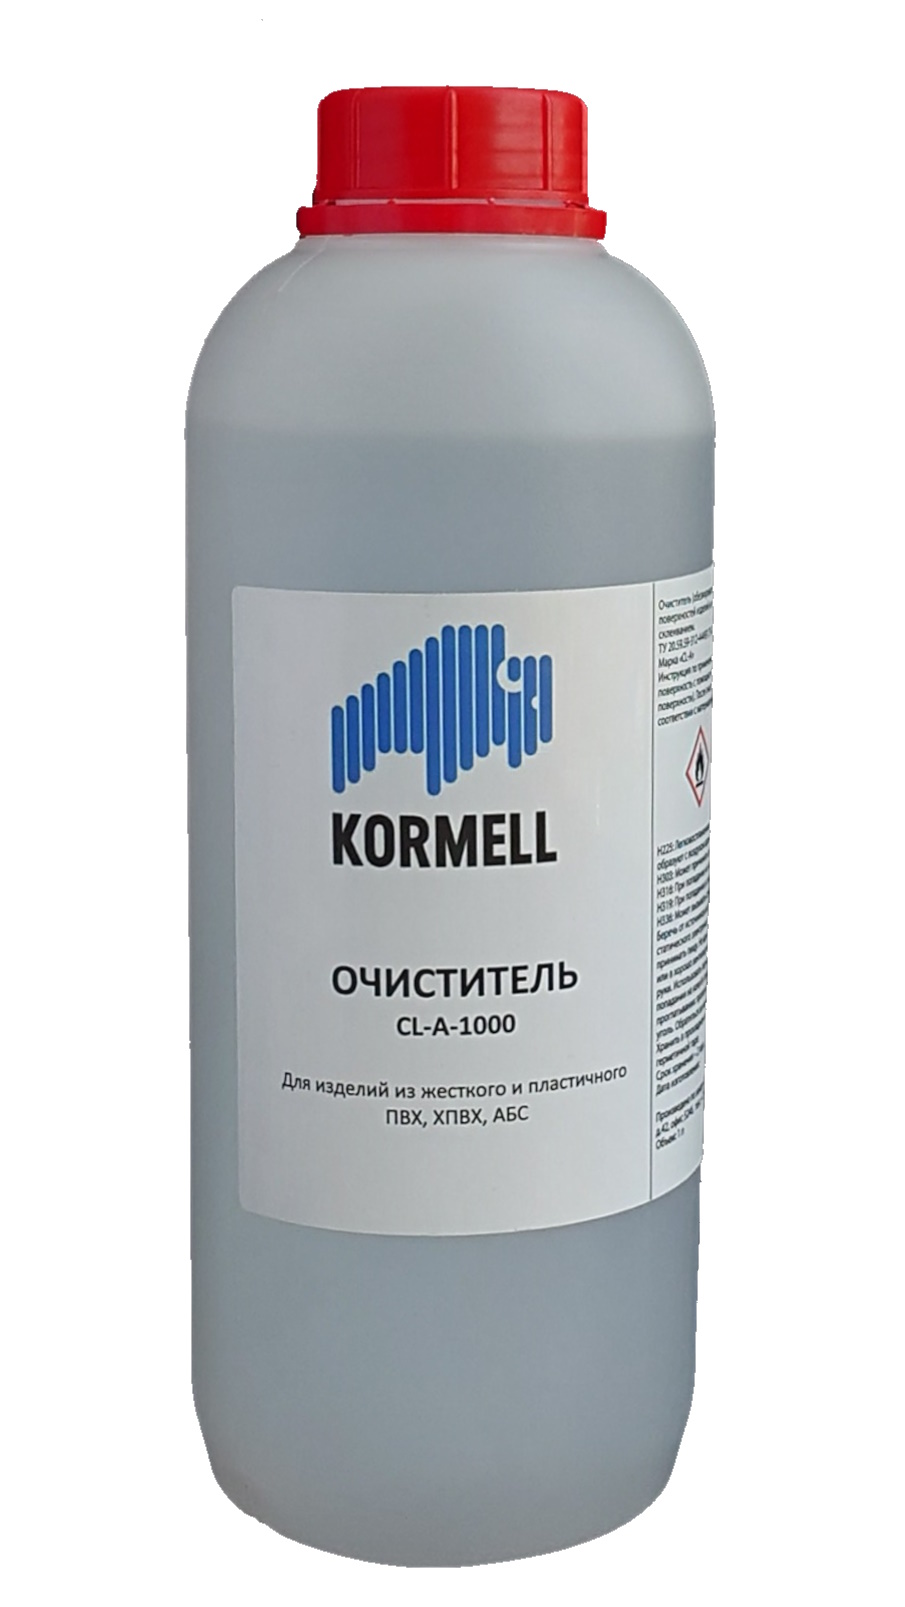 Очиститель Kormell CL-A